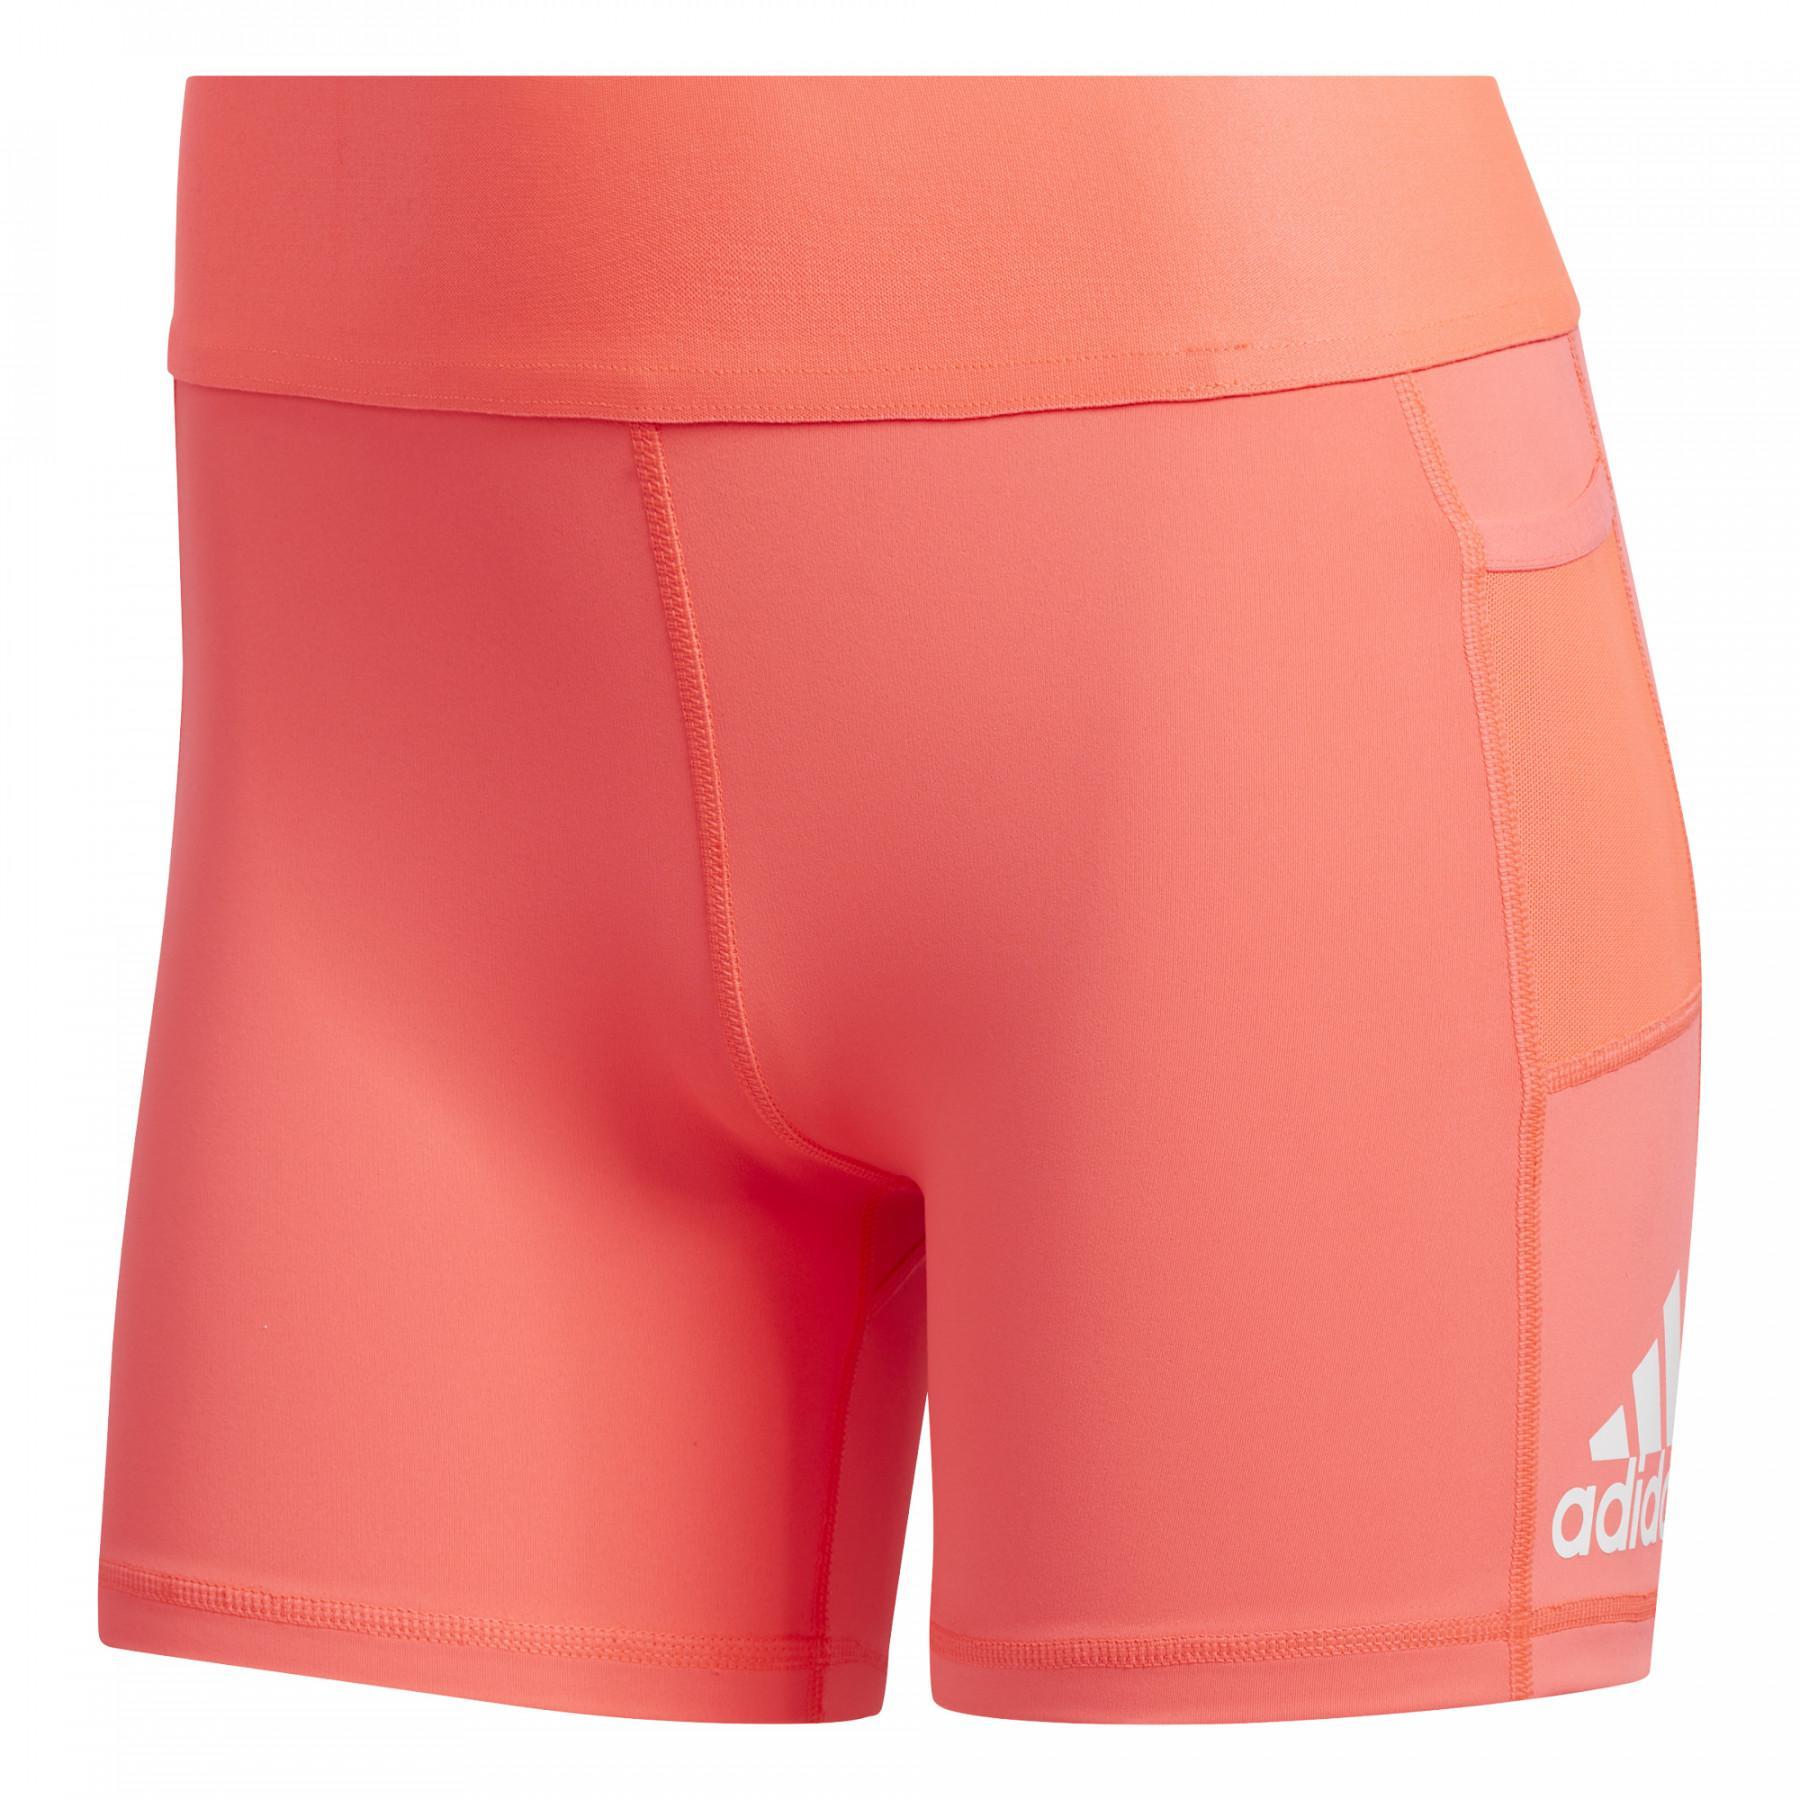 Women's shorts adidas Alphaskin